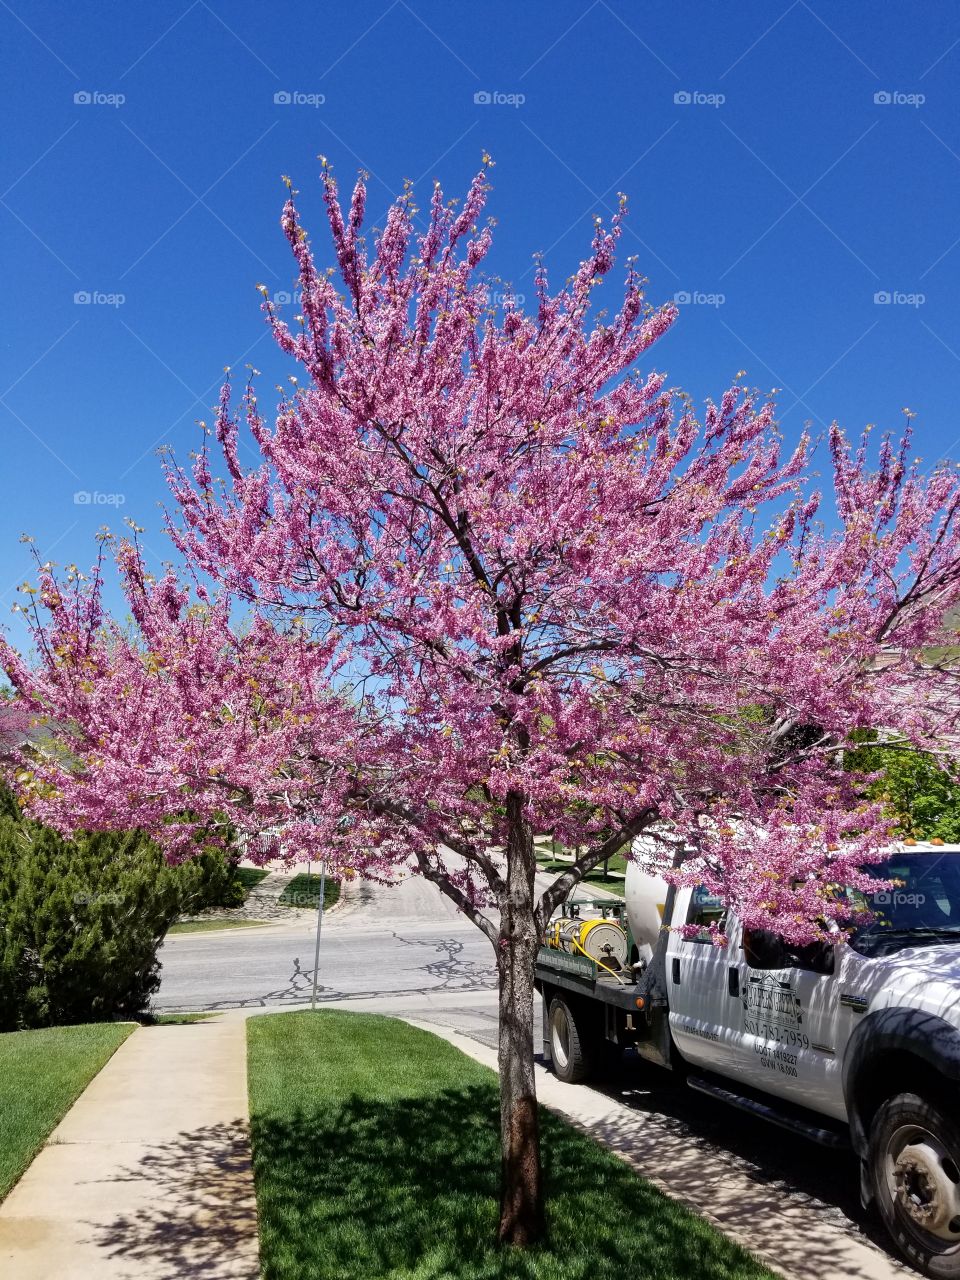 healthy ornamental cherry tree. 
beautiful.